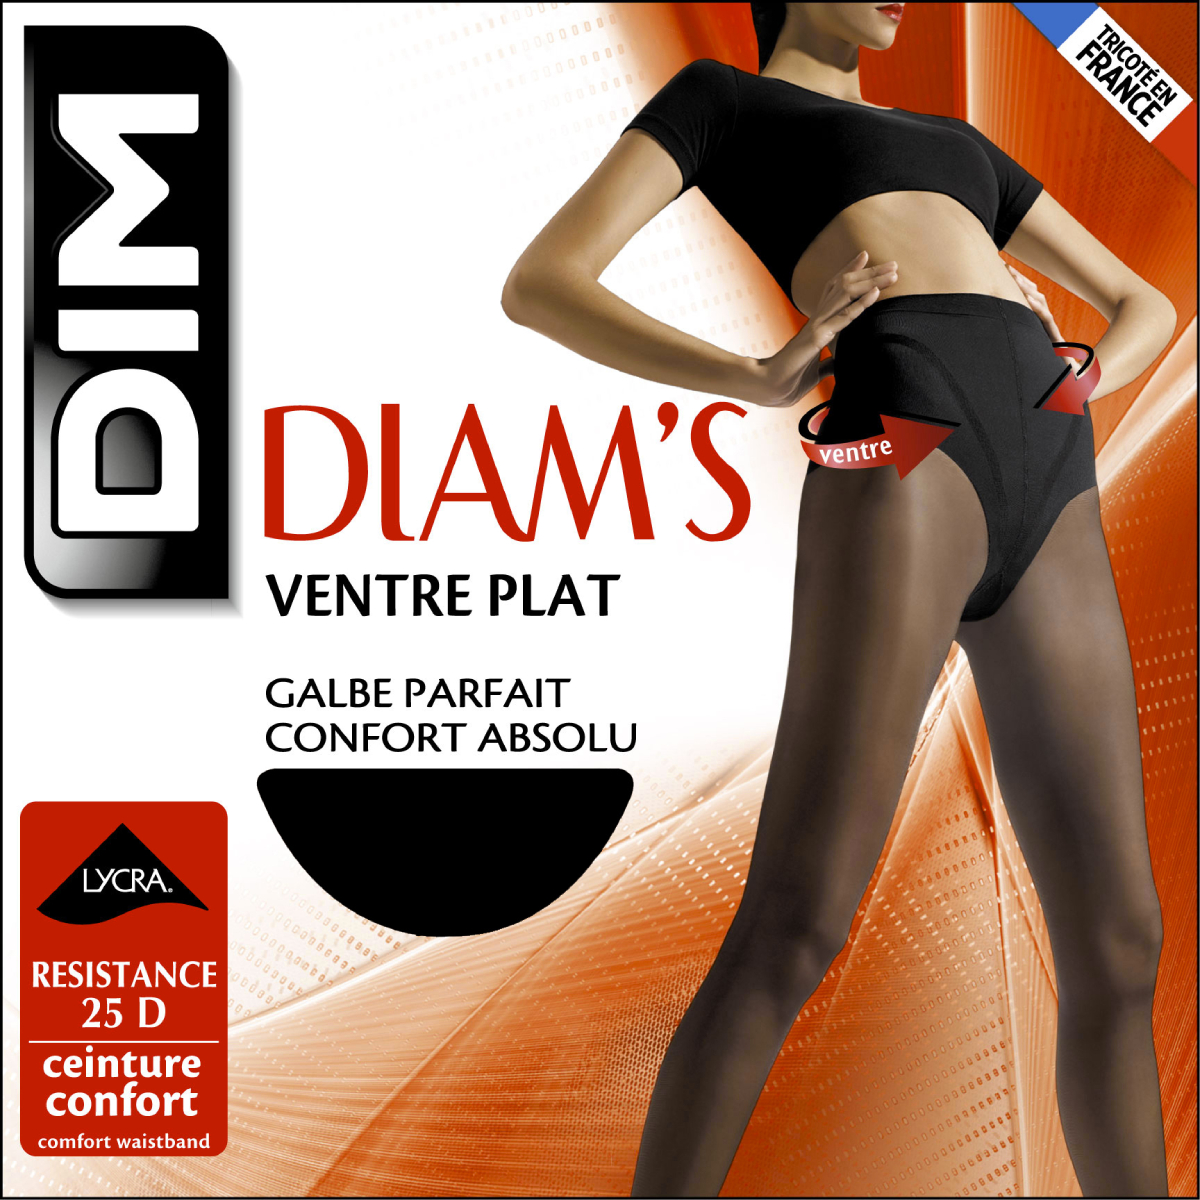 Promo Collant Diam's Ventre Plat Dim chez Géant Casino